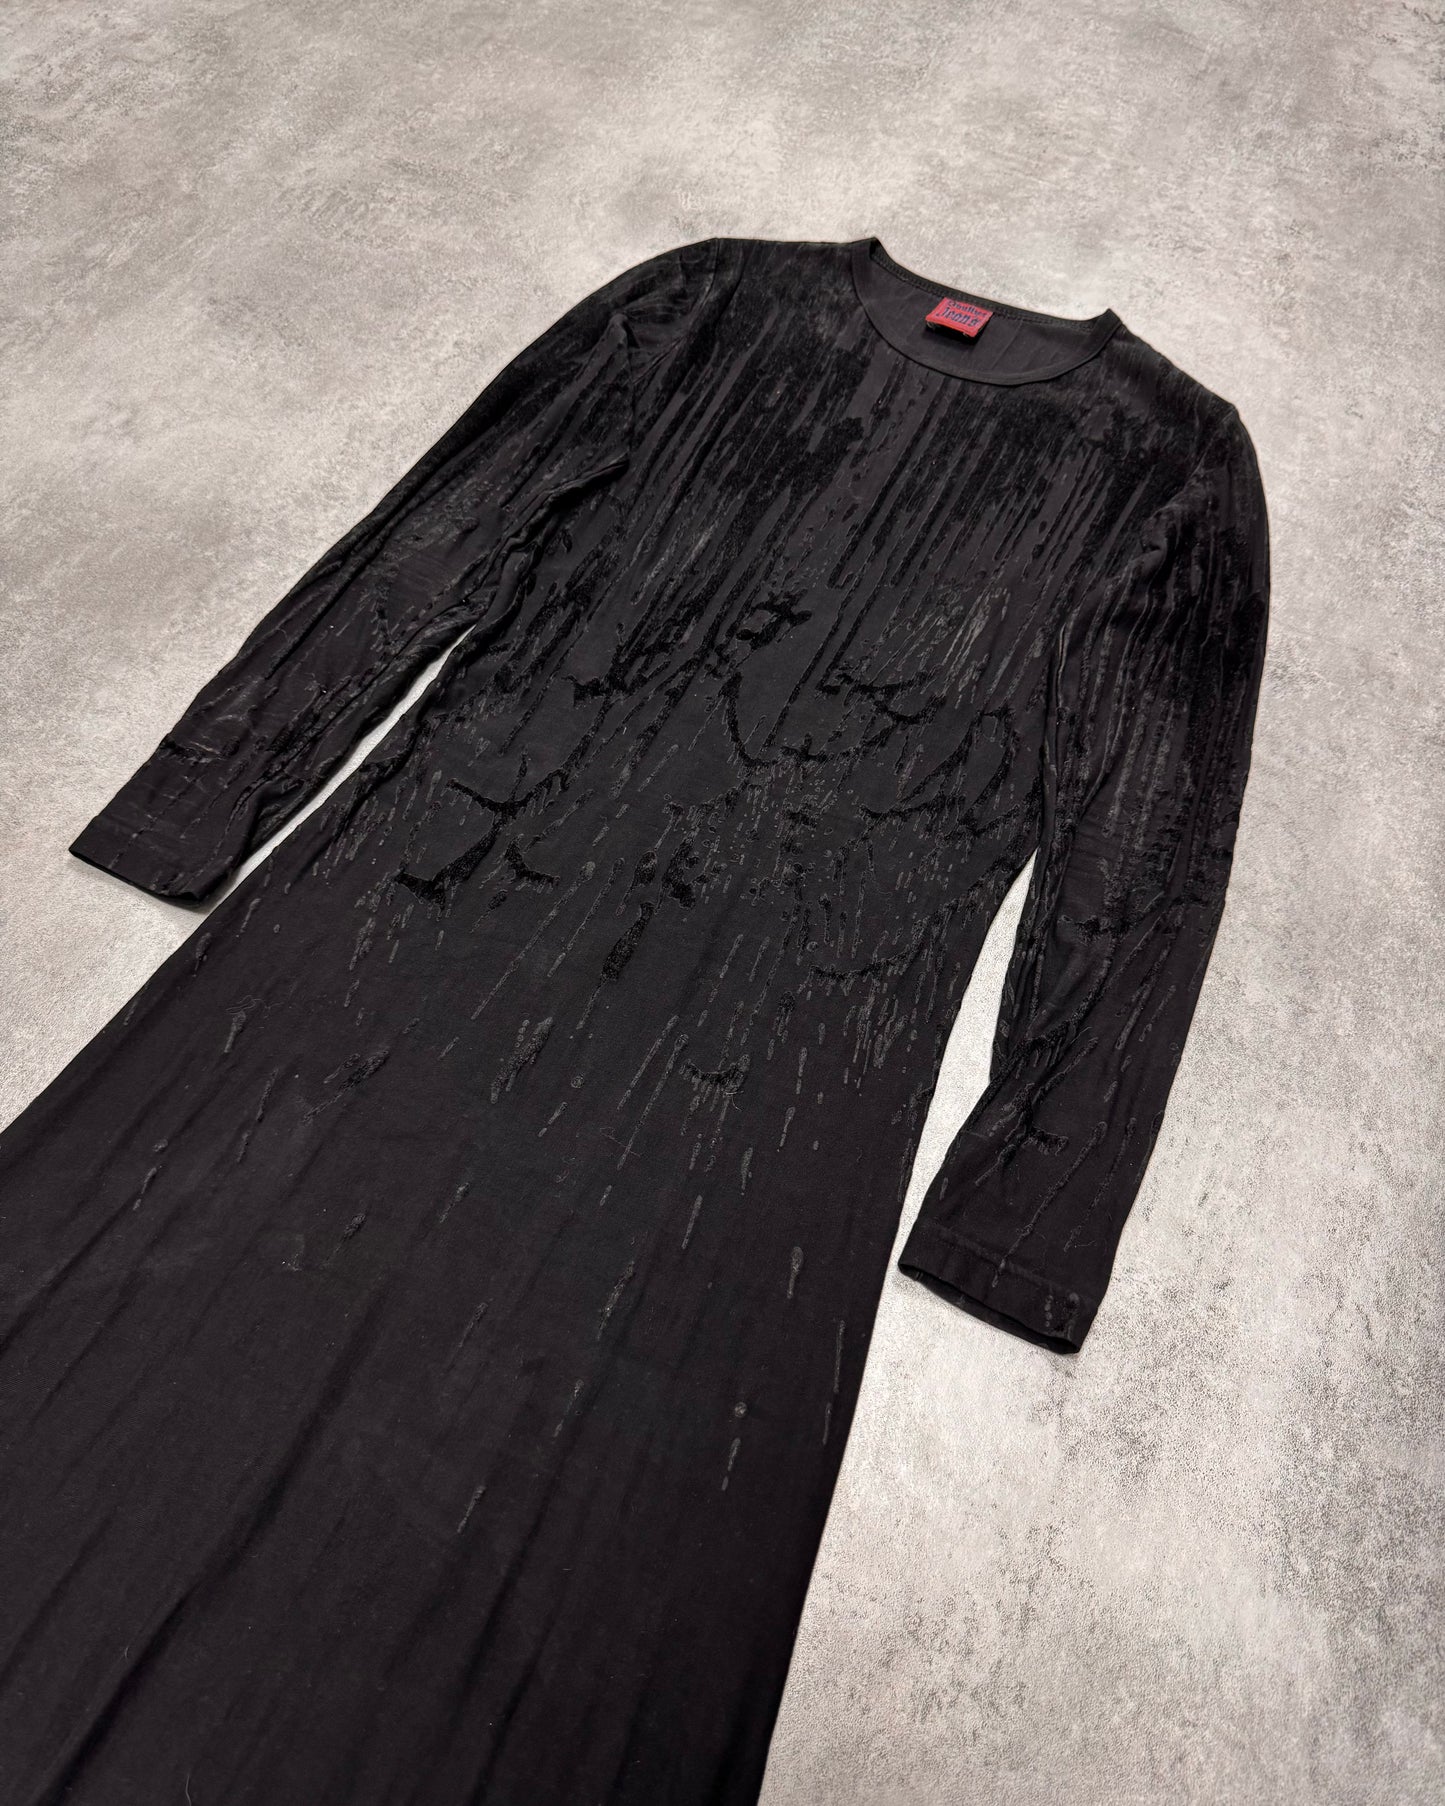 AW1998 Jean Paul Gaultier Blood Drip Black Maxi Dress (XS)